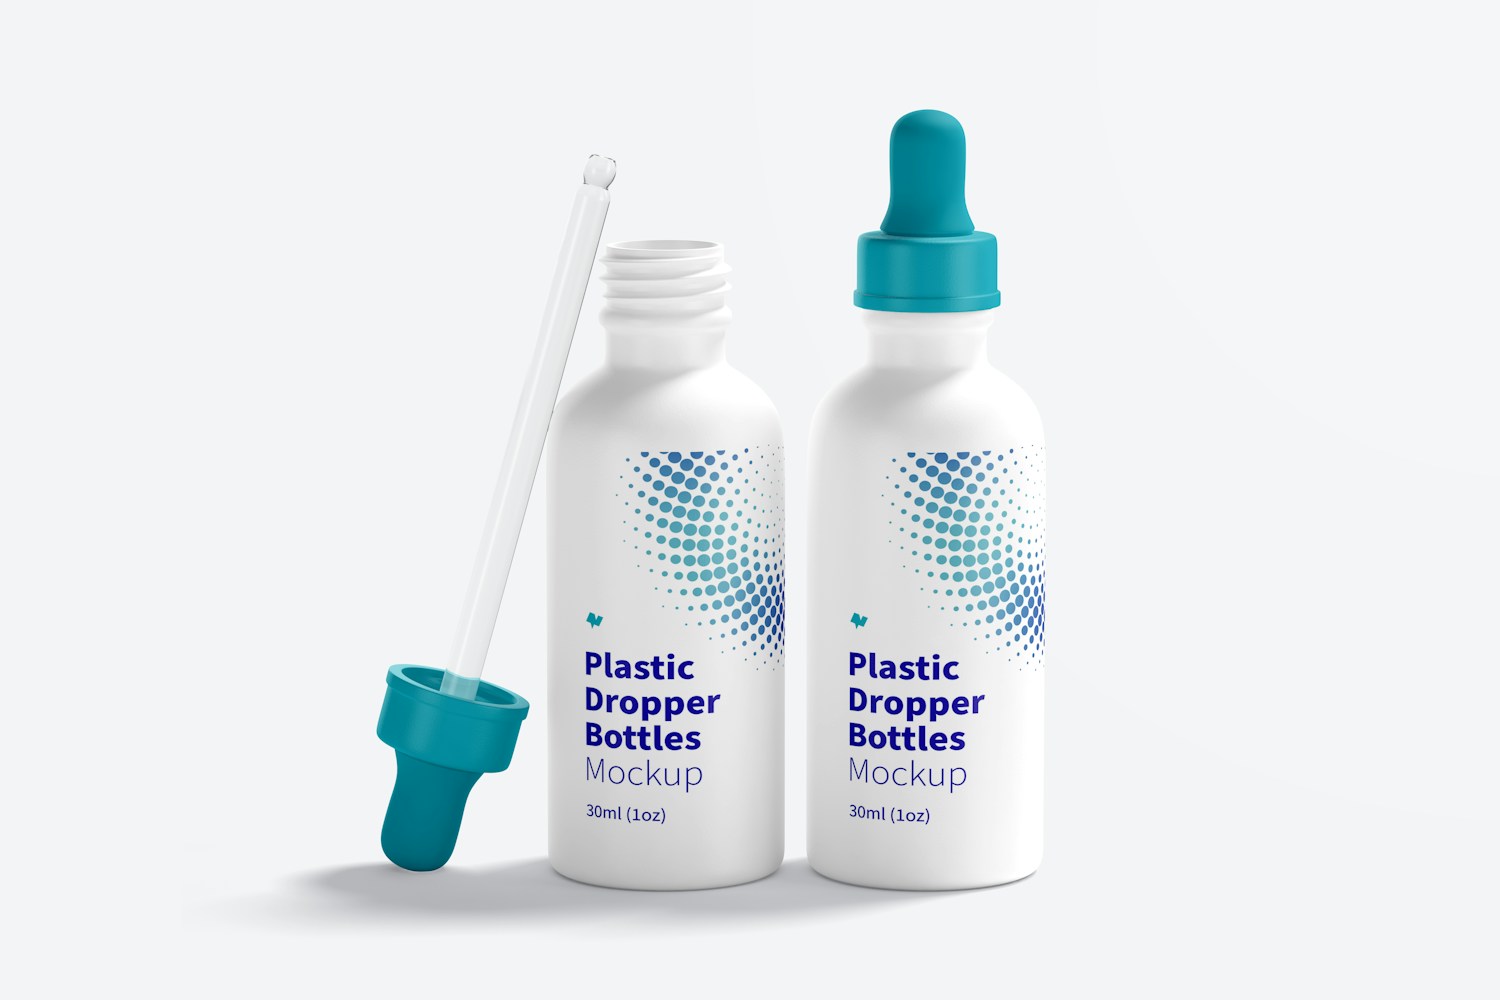 Two Plastic Dropper Bottles Mockup